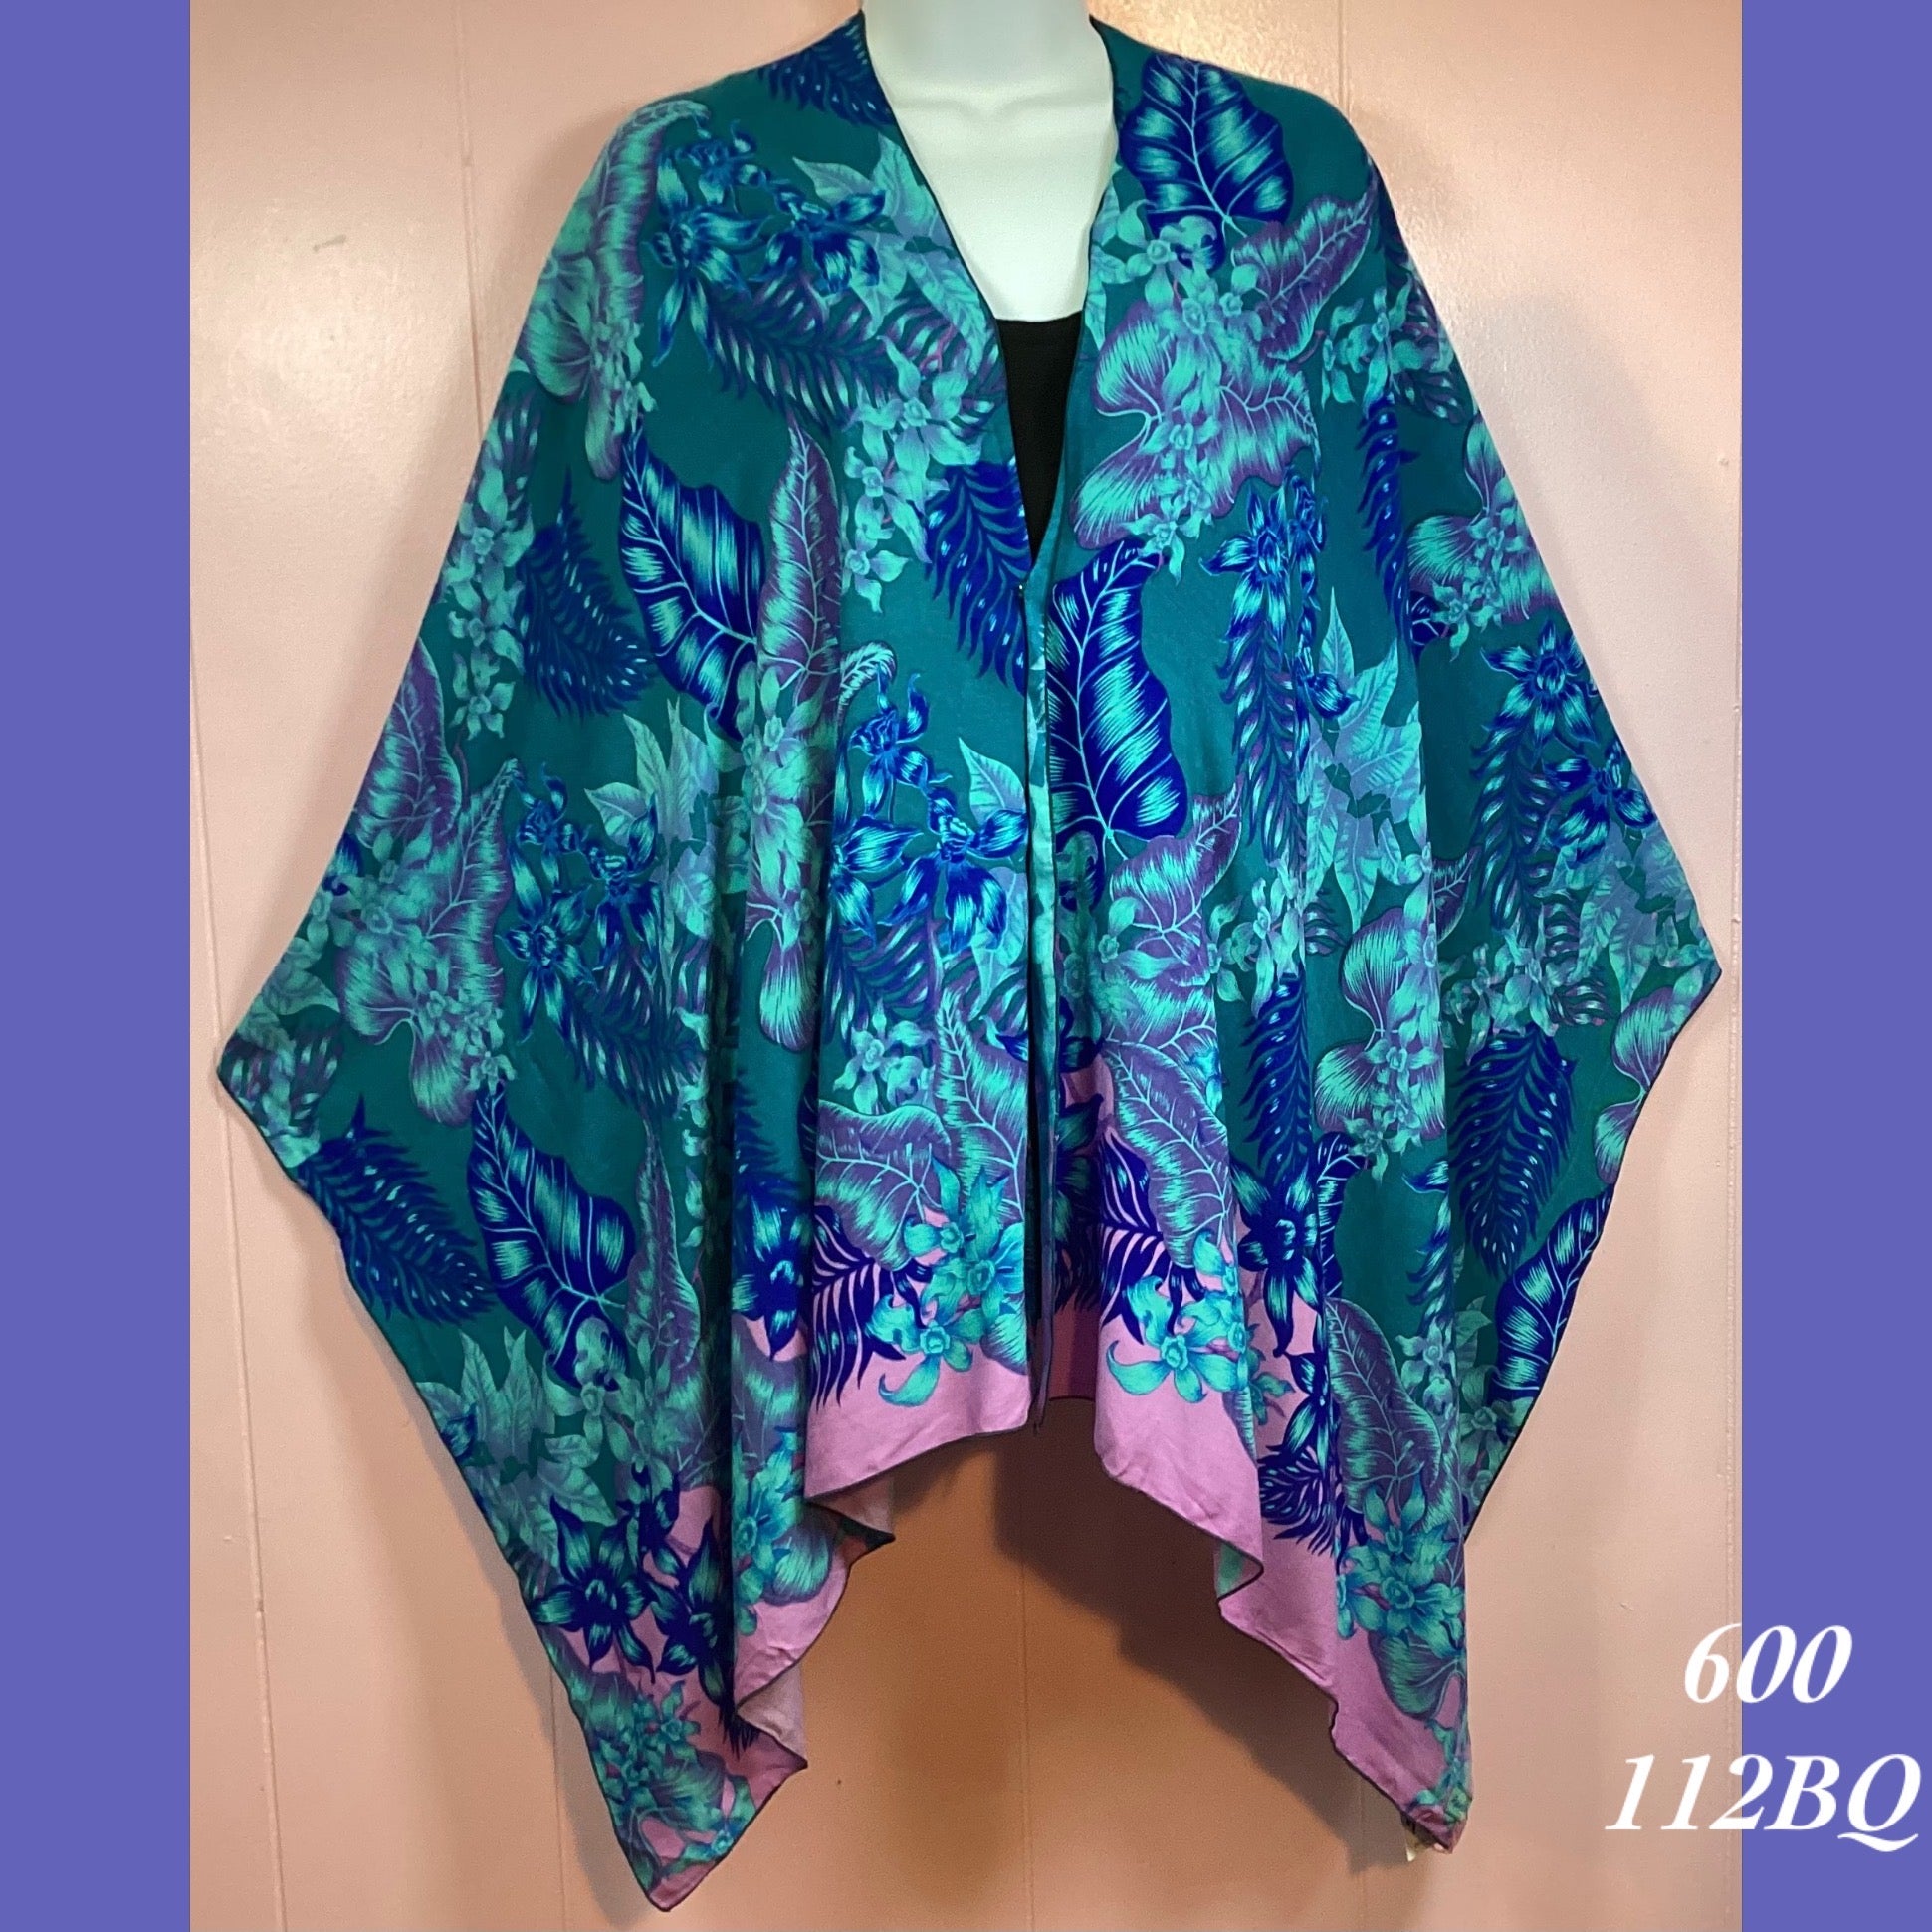 600 - 112BQ , Shoulder wrap sarong